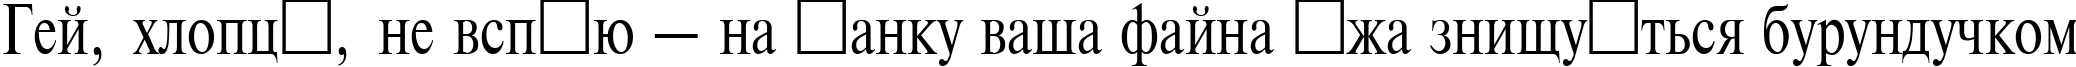 Пример написания шрифтом TimesET 85n текста на украинском